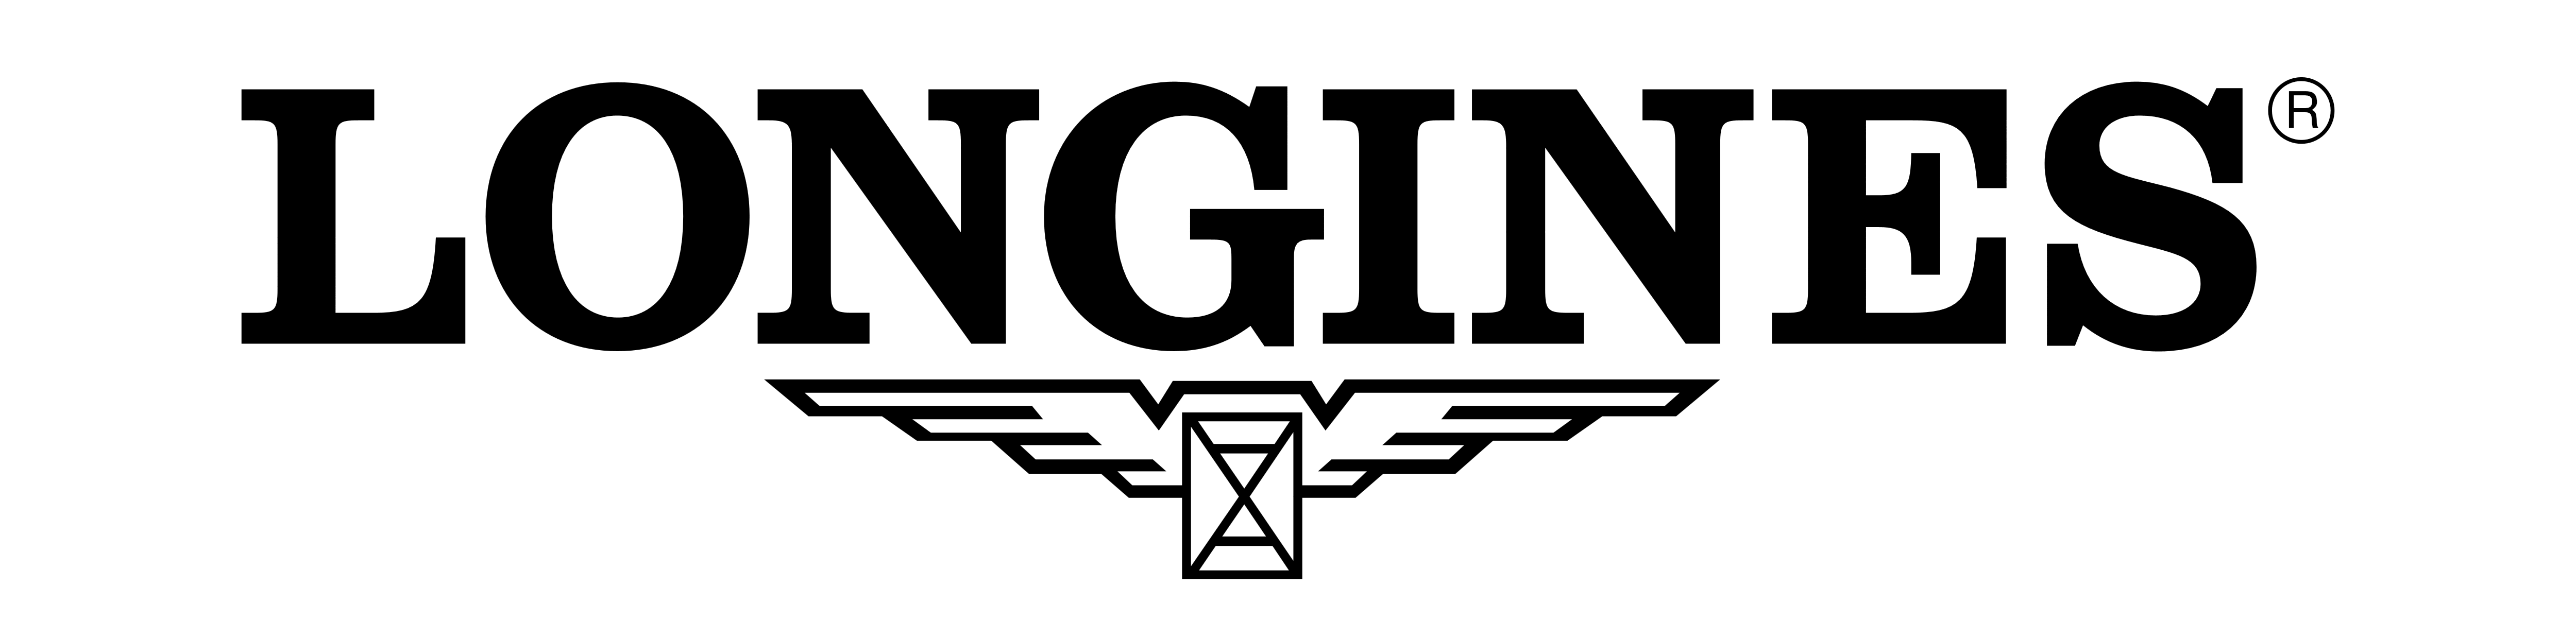 Longines – Logos Download